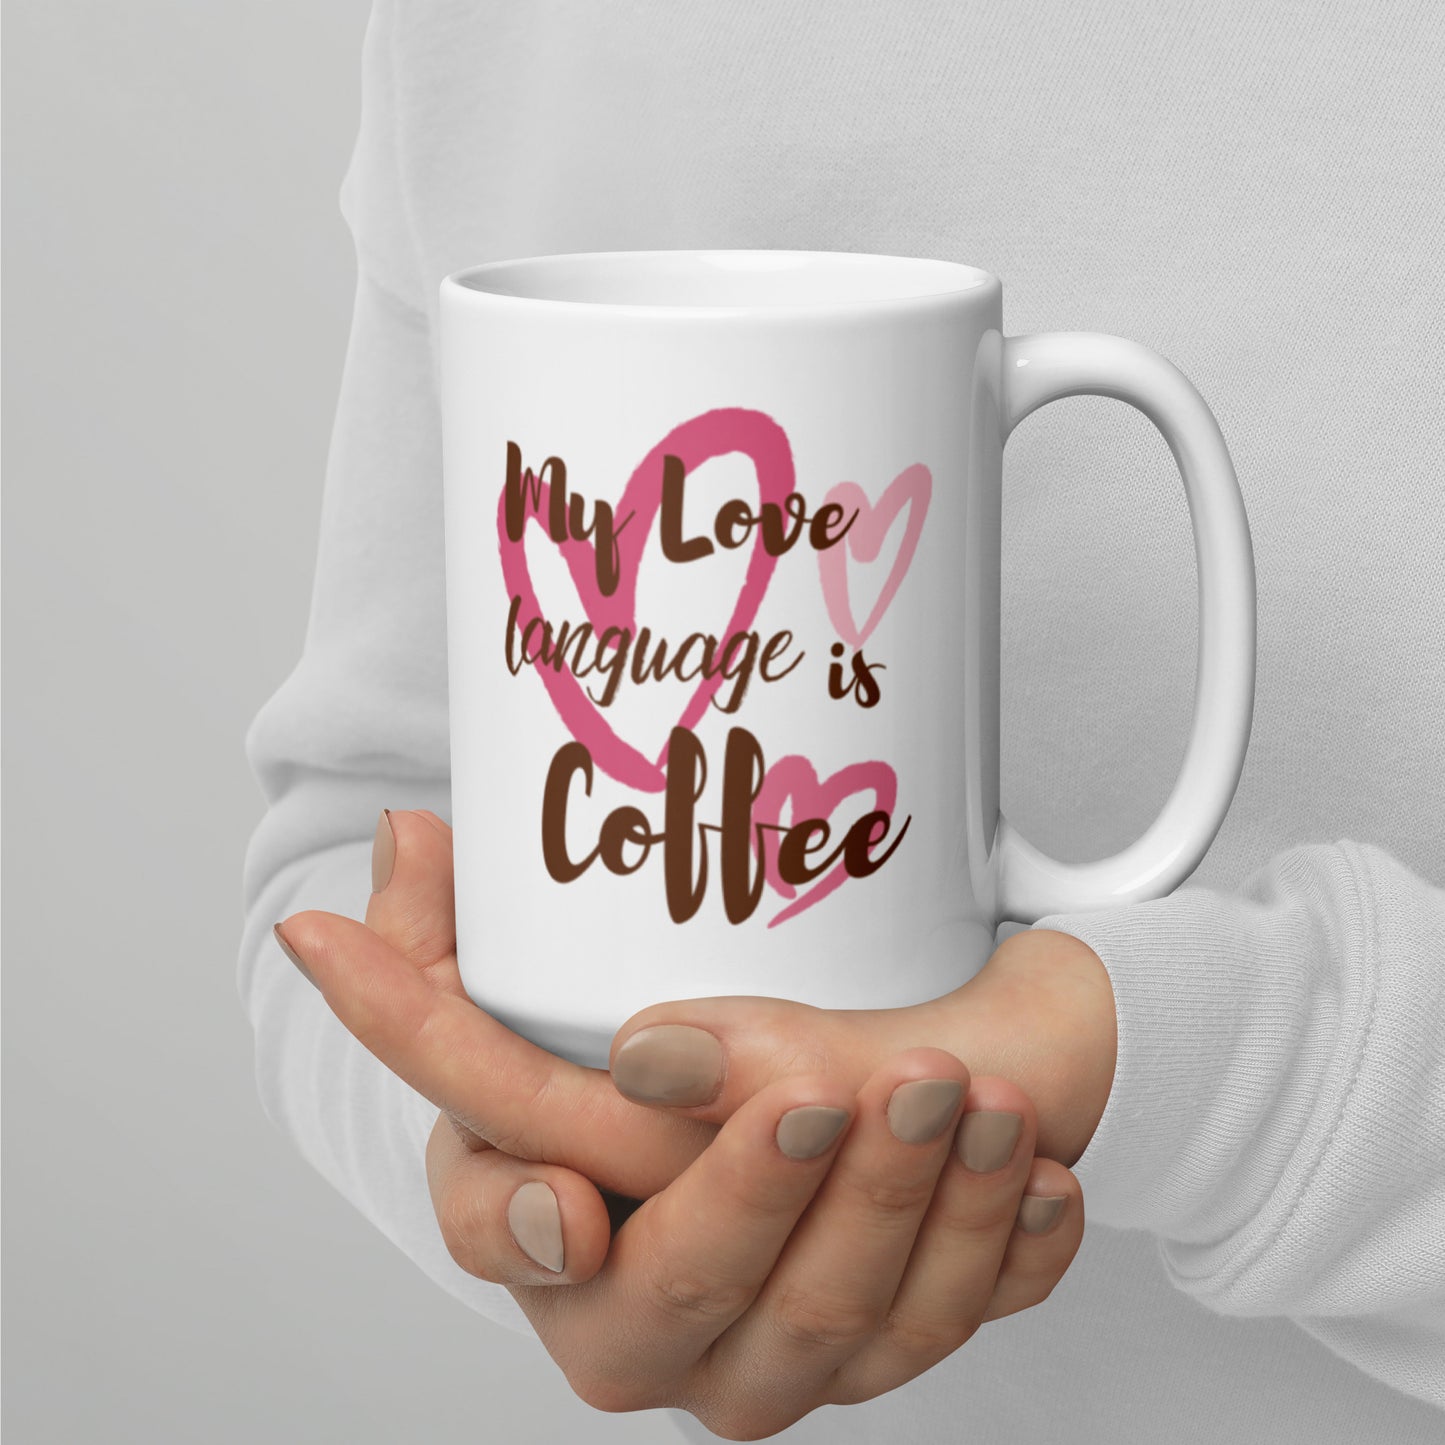 "My Love Language Is Coffee" White glossy mug